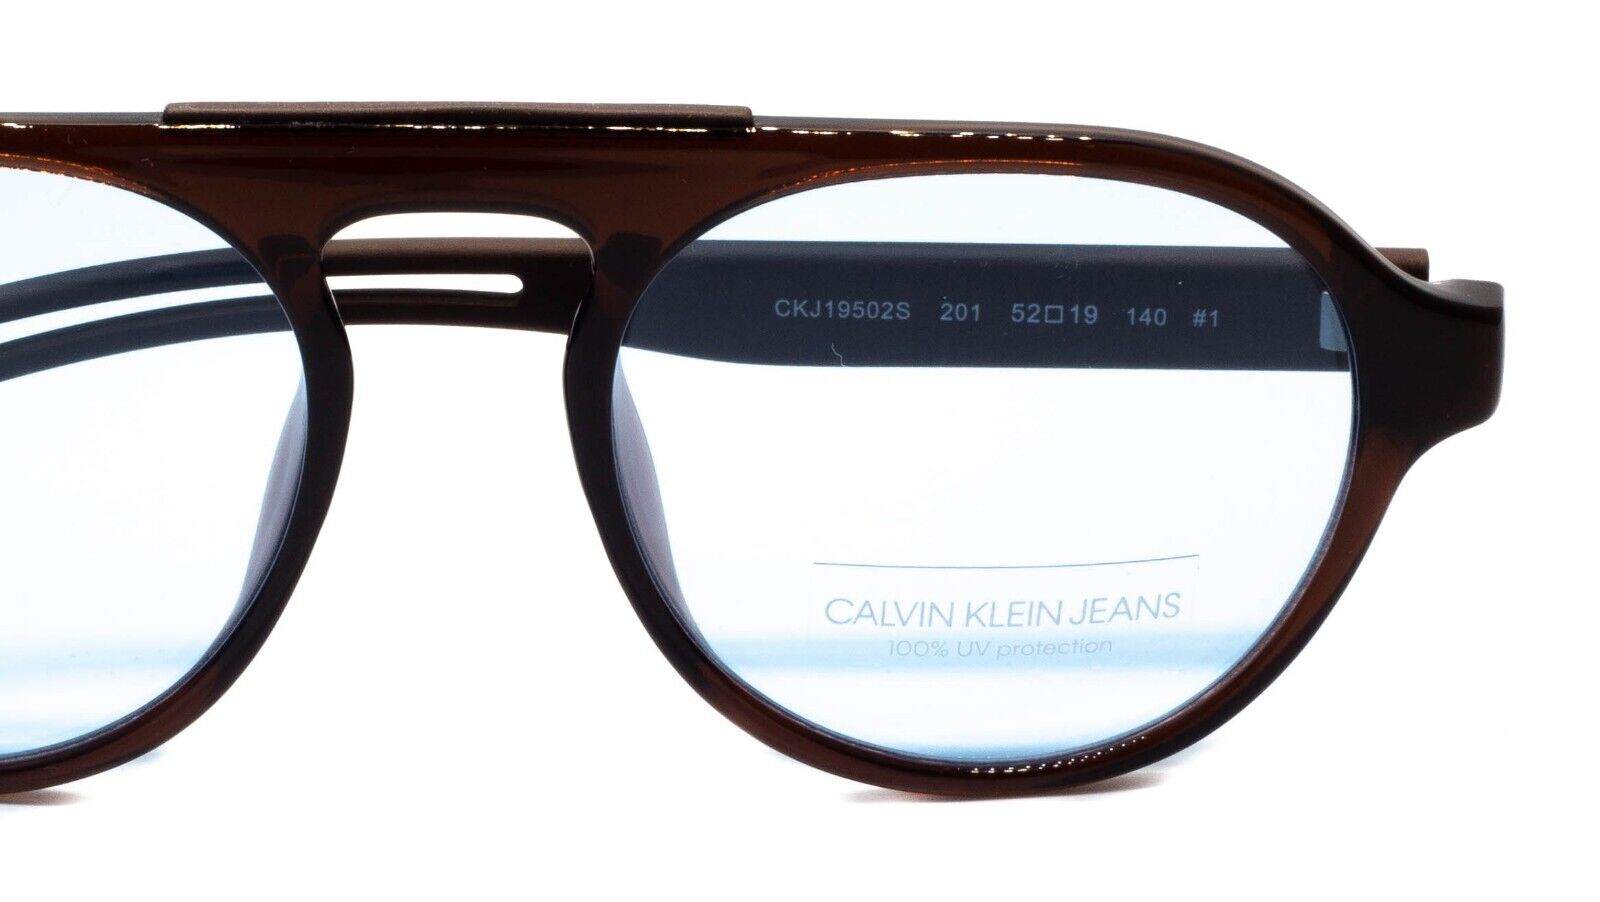 CALVIN KLEIN - Sunglasses GGV 52mm 201 19502S Frames CKJ JEANS New #1 - Eyewear Eyewear Shades